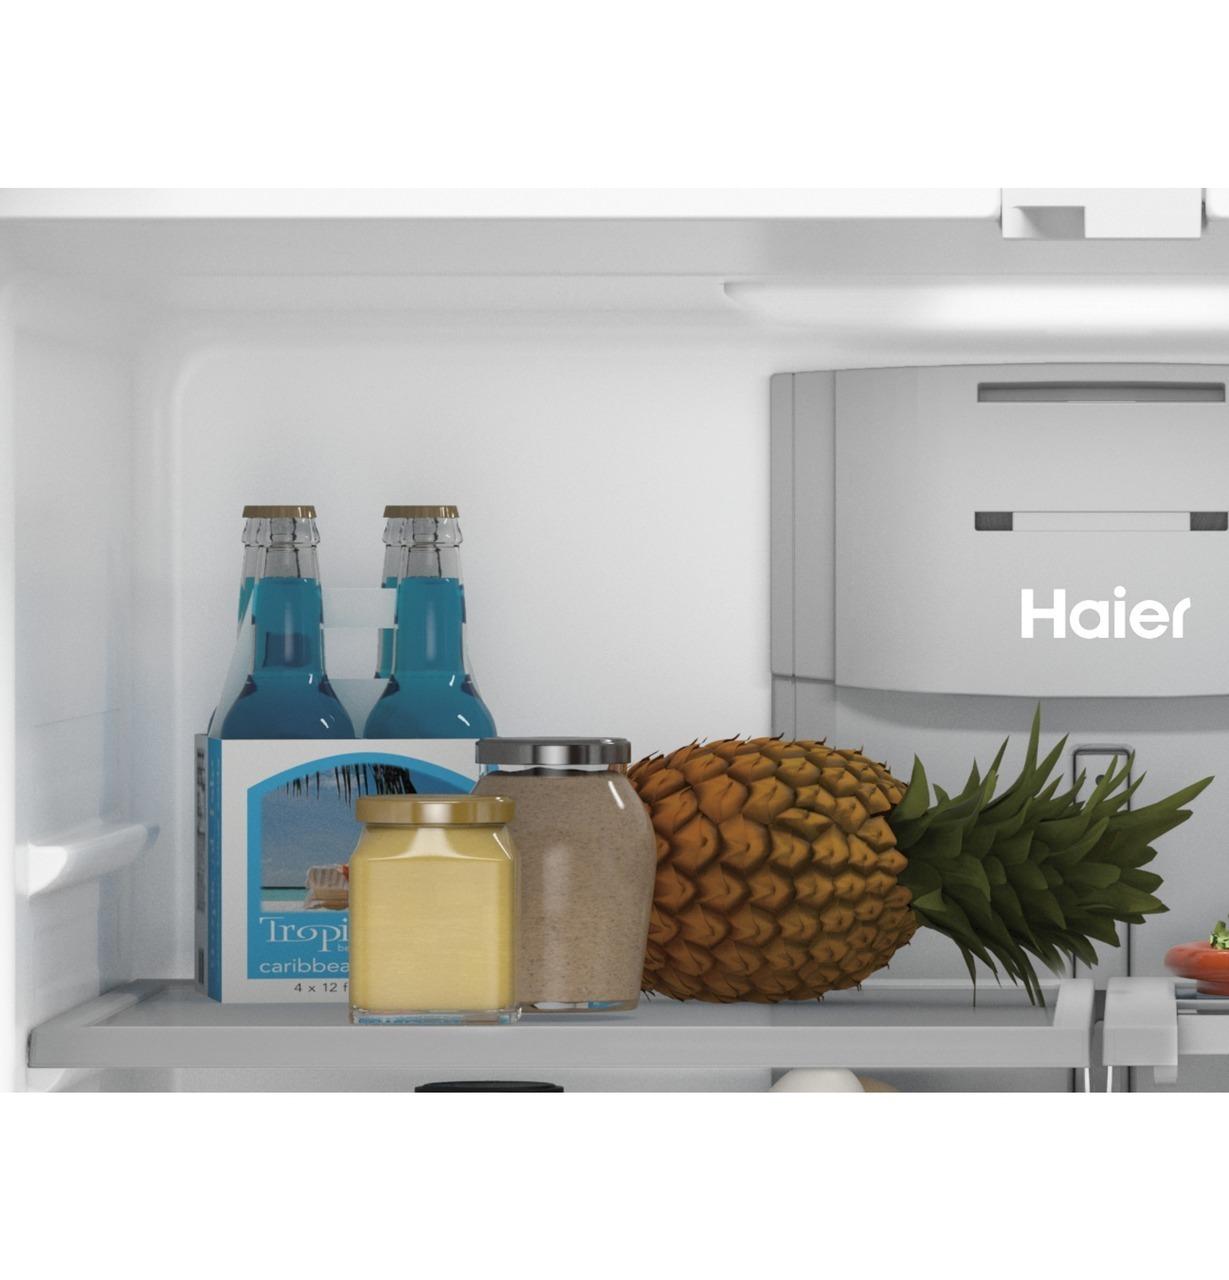 Haier ENERGY STAR® 27.0 Cu. Ft. French-Door Refrigerator